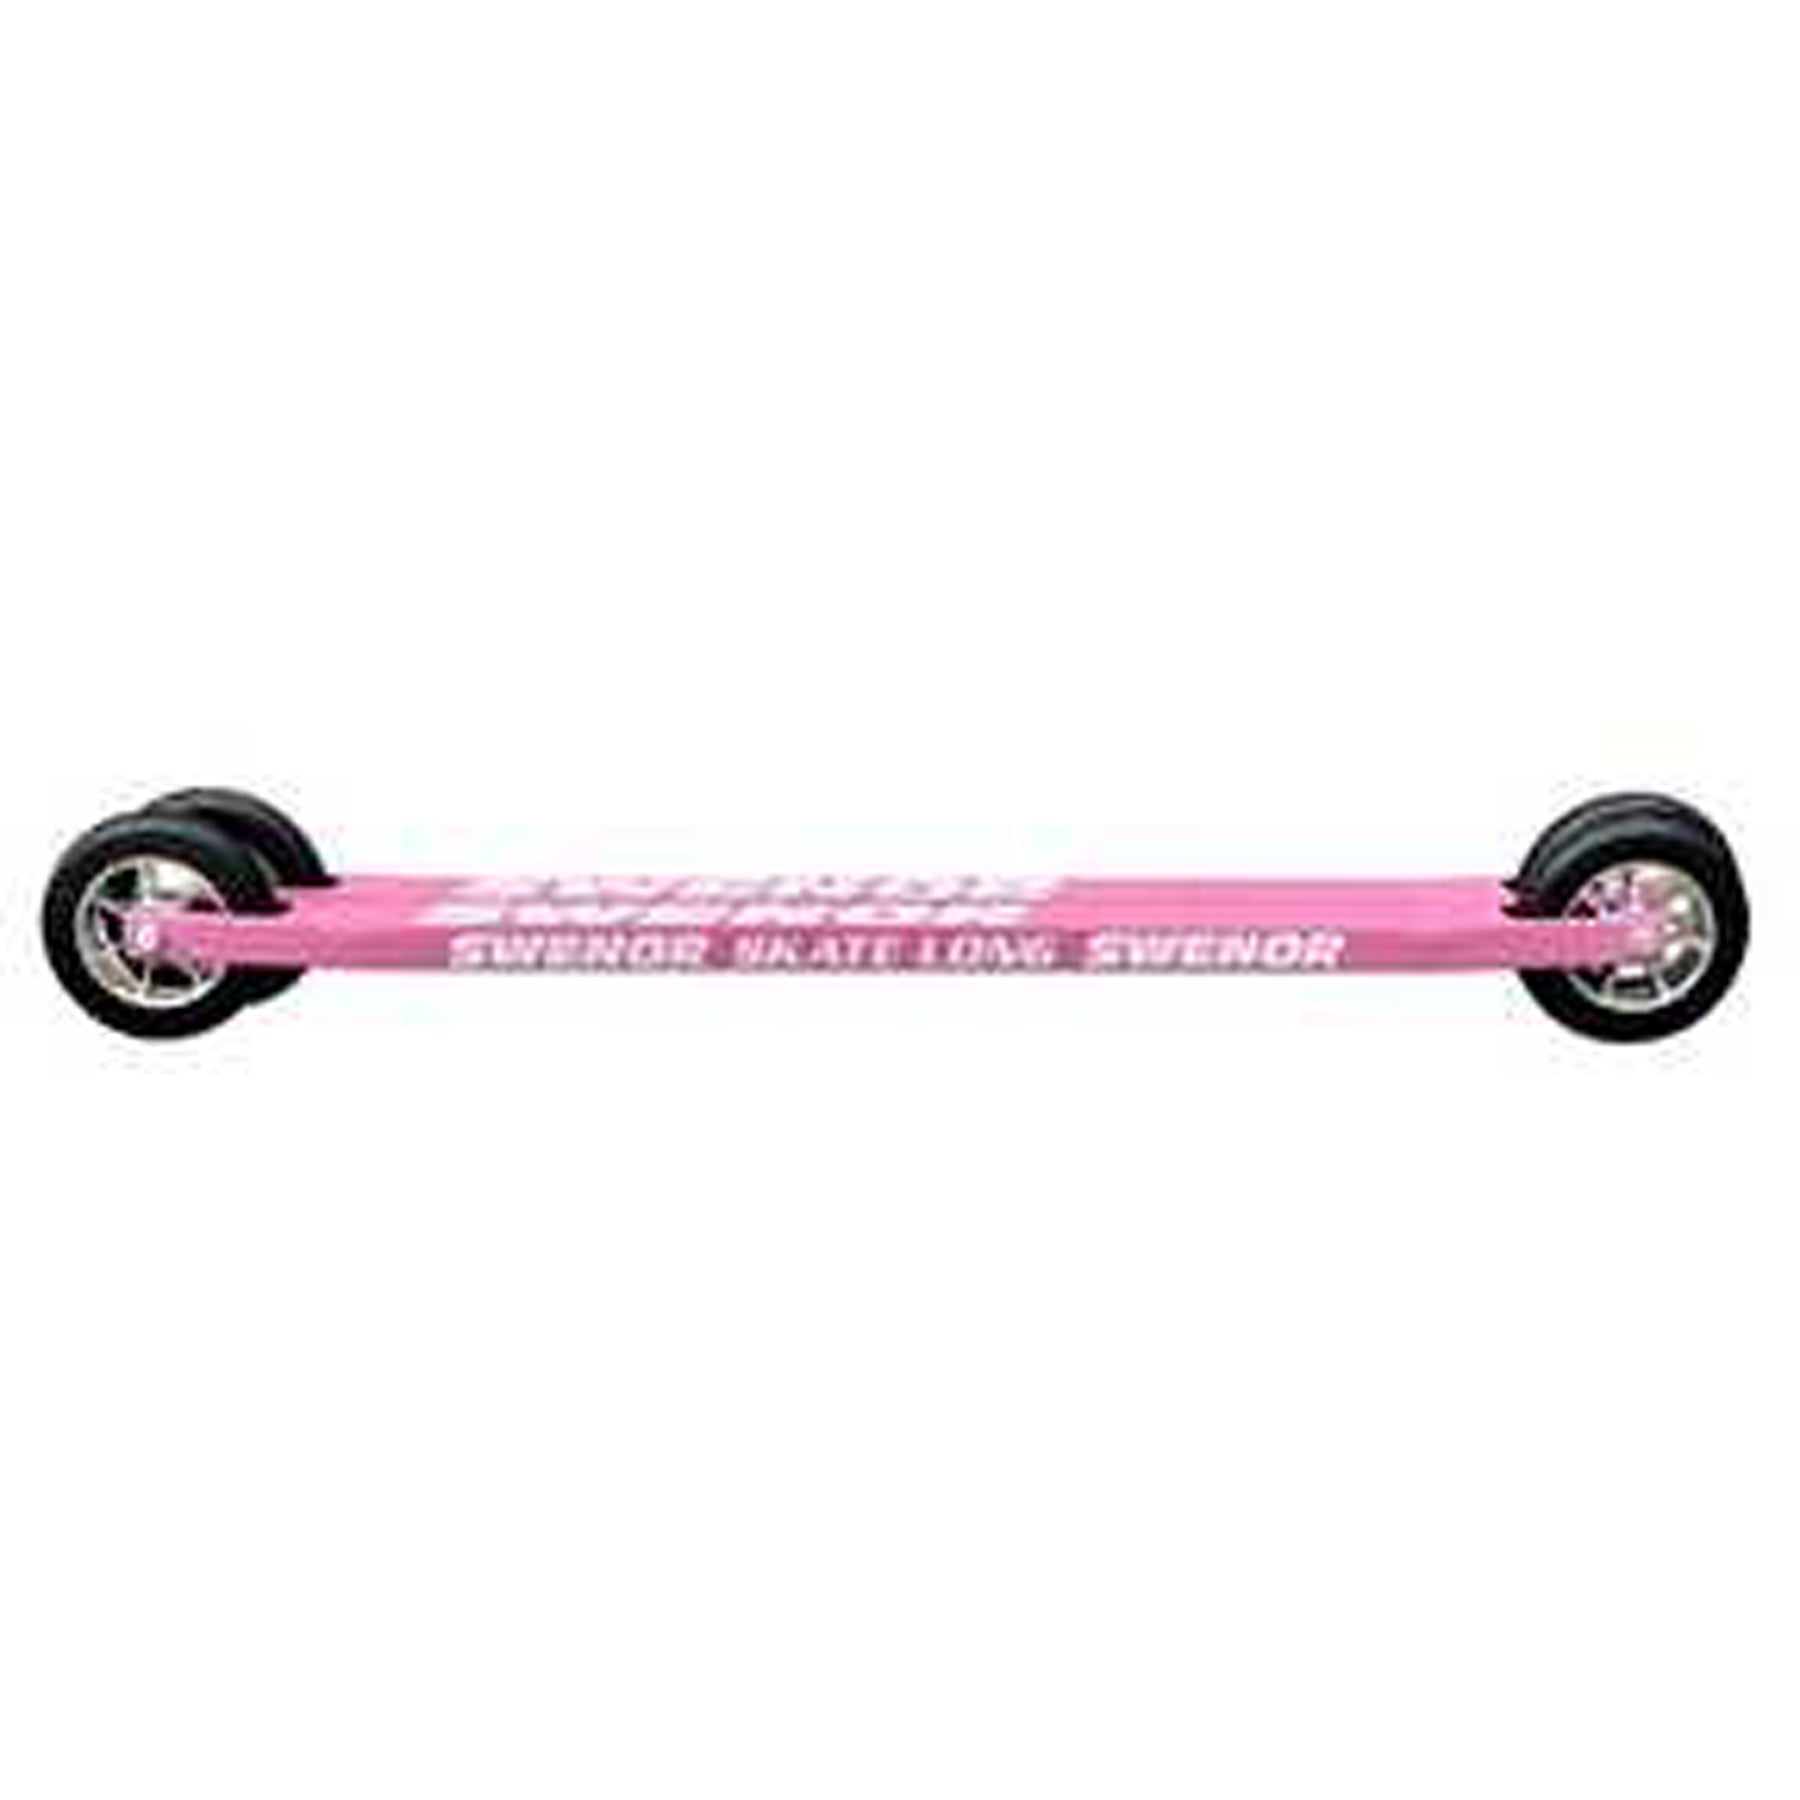 Swenor Rollerski Skate Long 65-000L Pink Edition